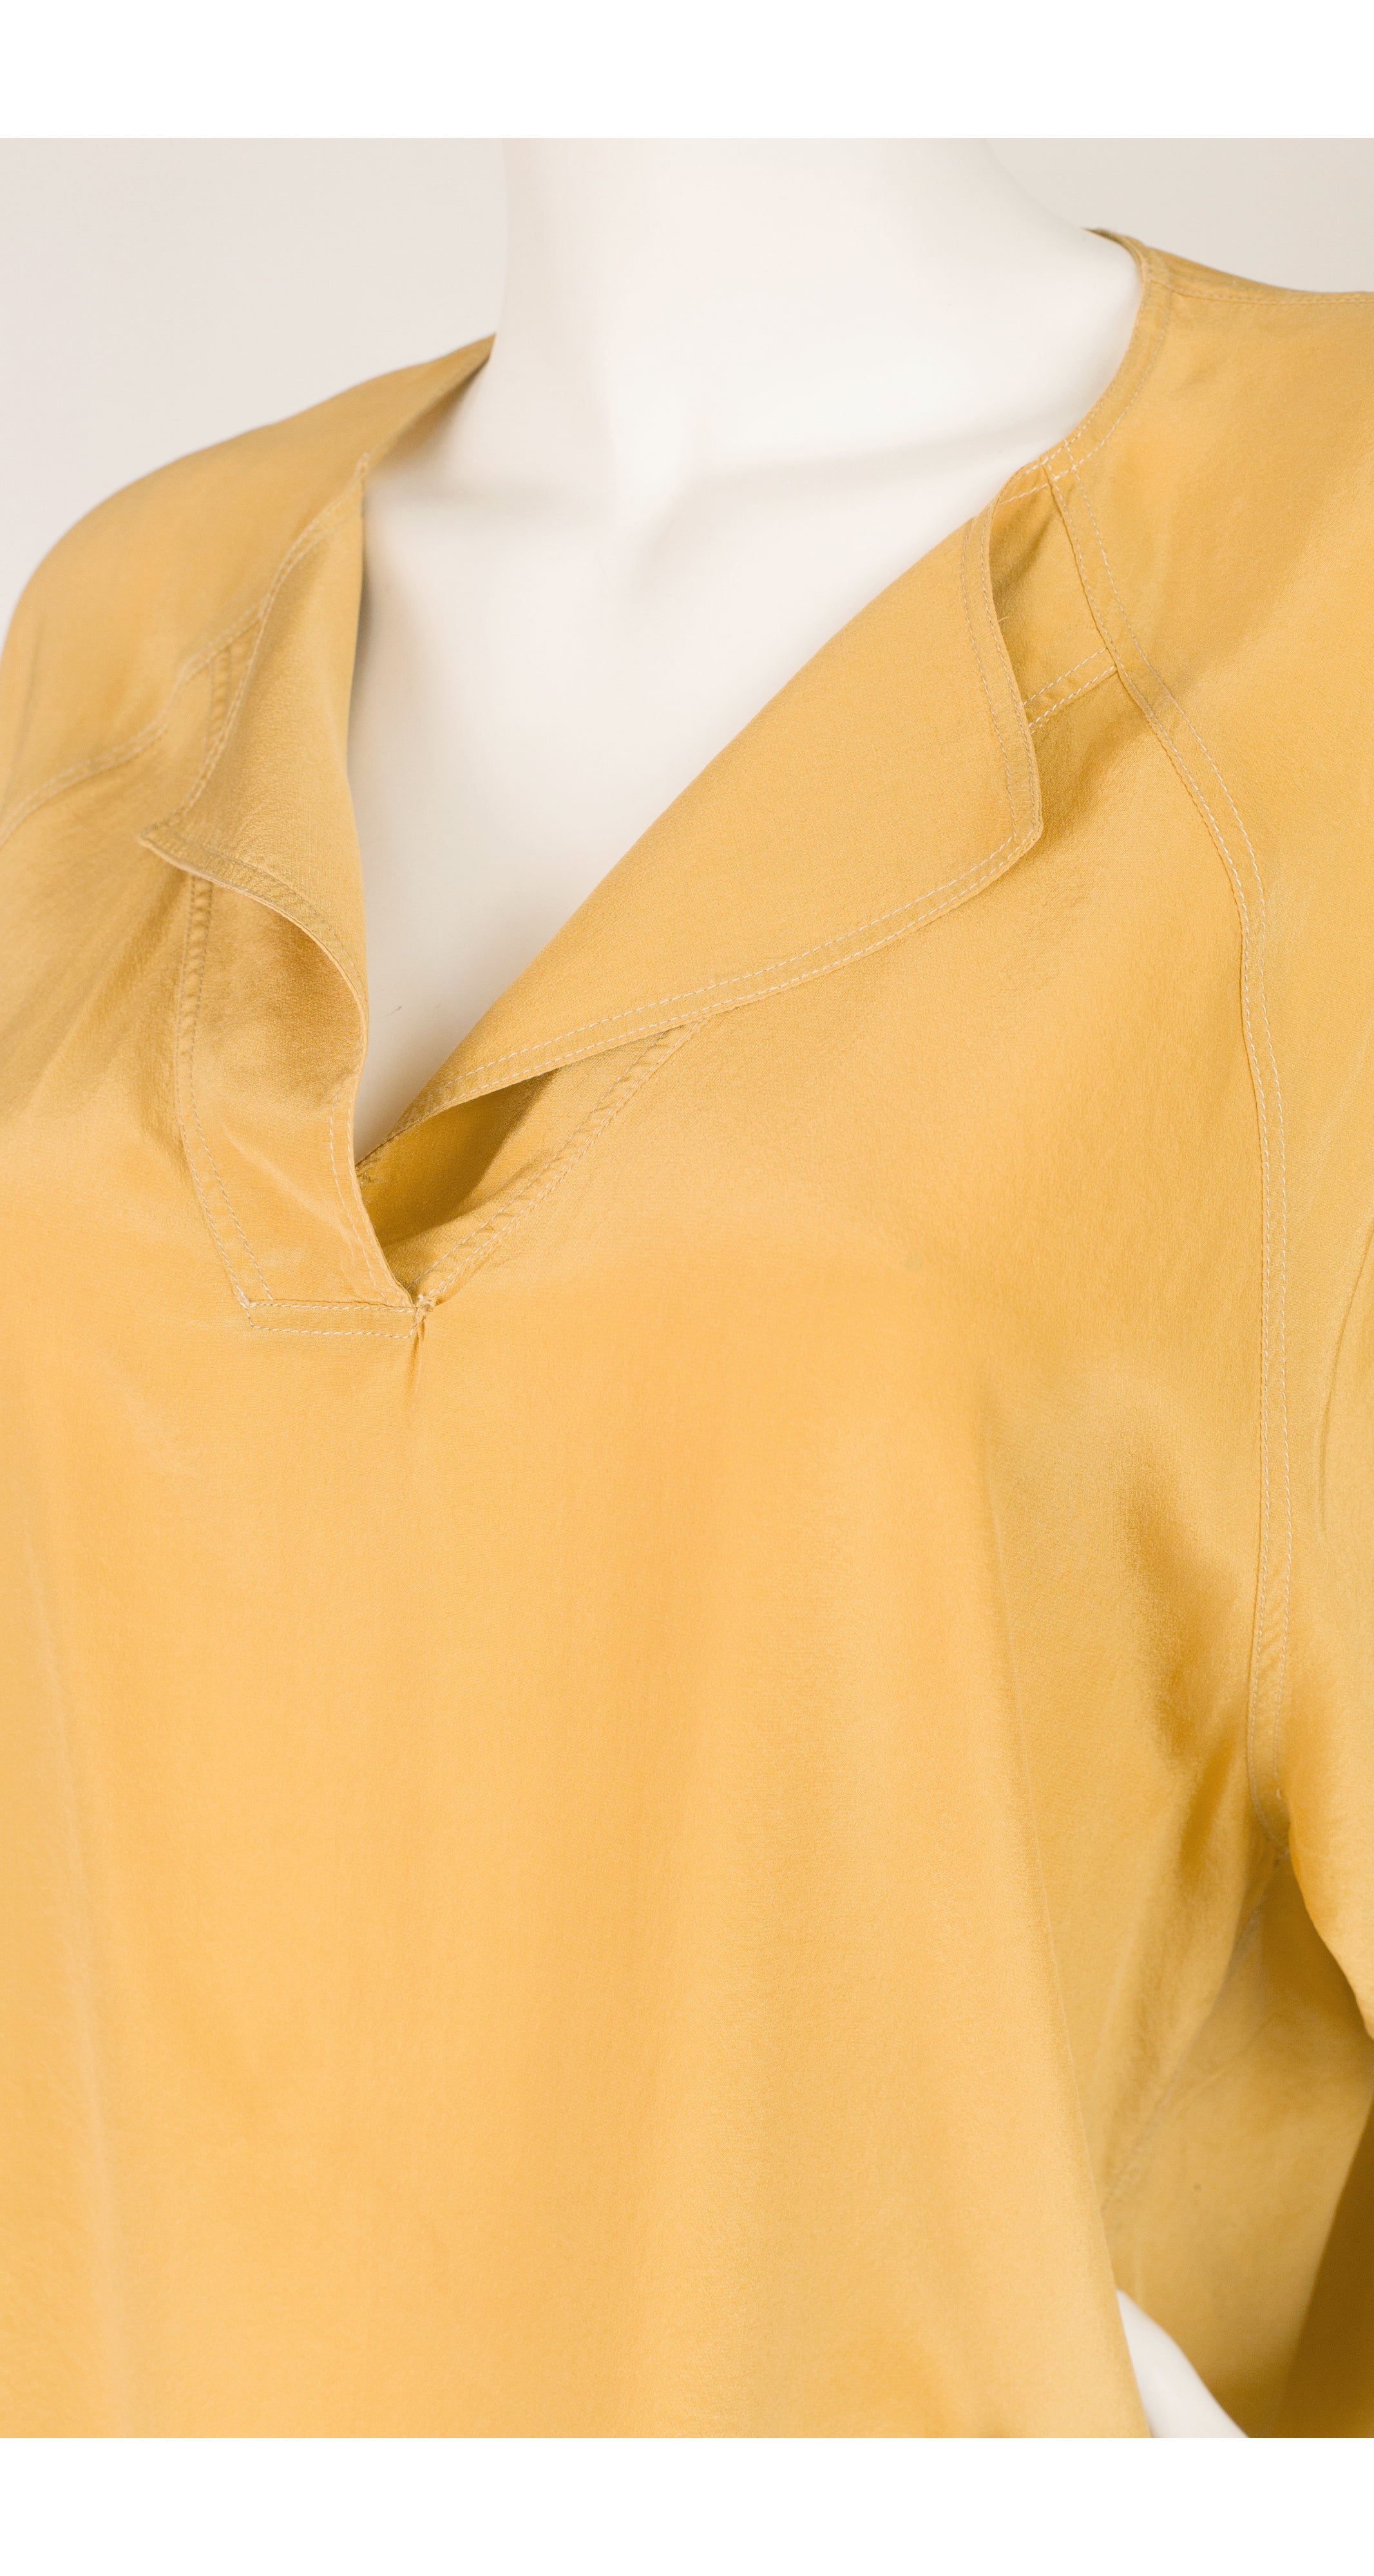 1970s Mustard Silk Wide Sleeve Blouse